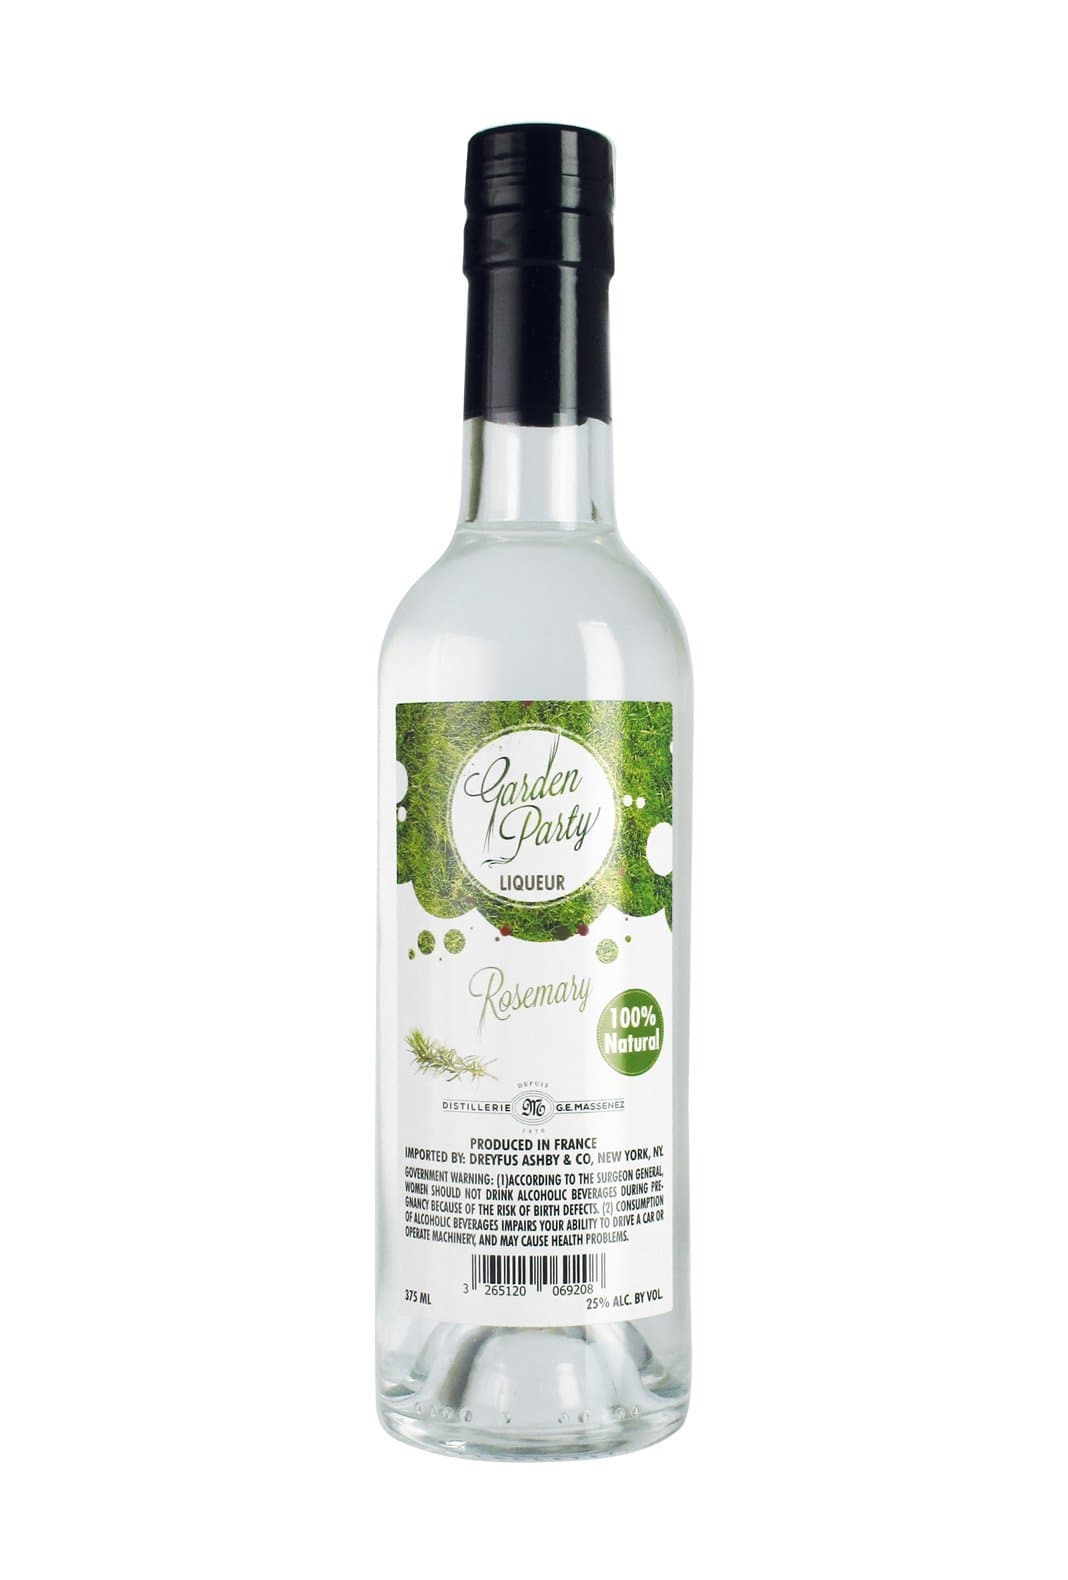 Massenez Garden Party Rosemary 25% 375ml | Liqueurs | Shop online at Spirits of France